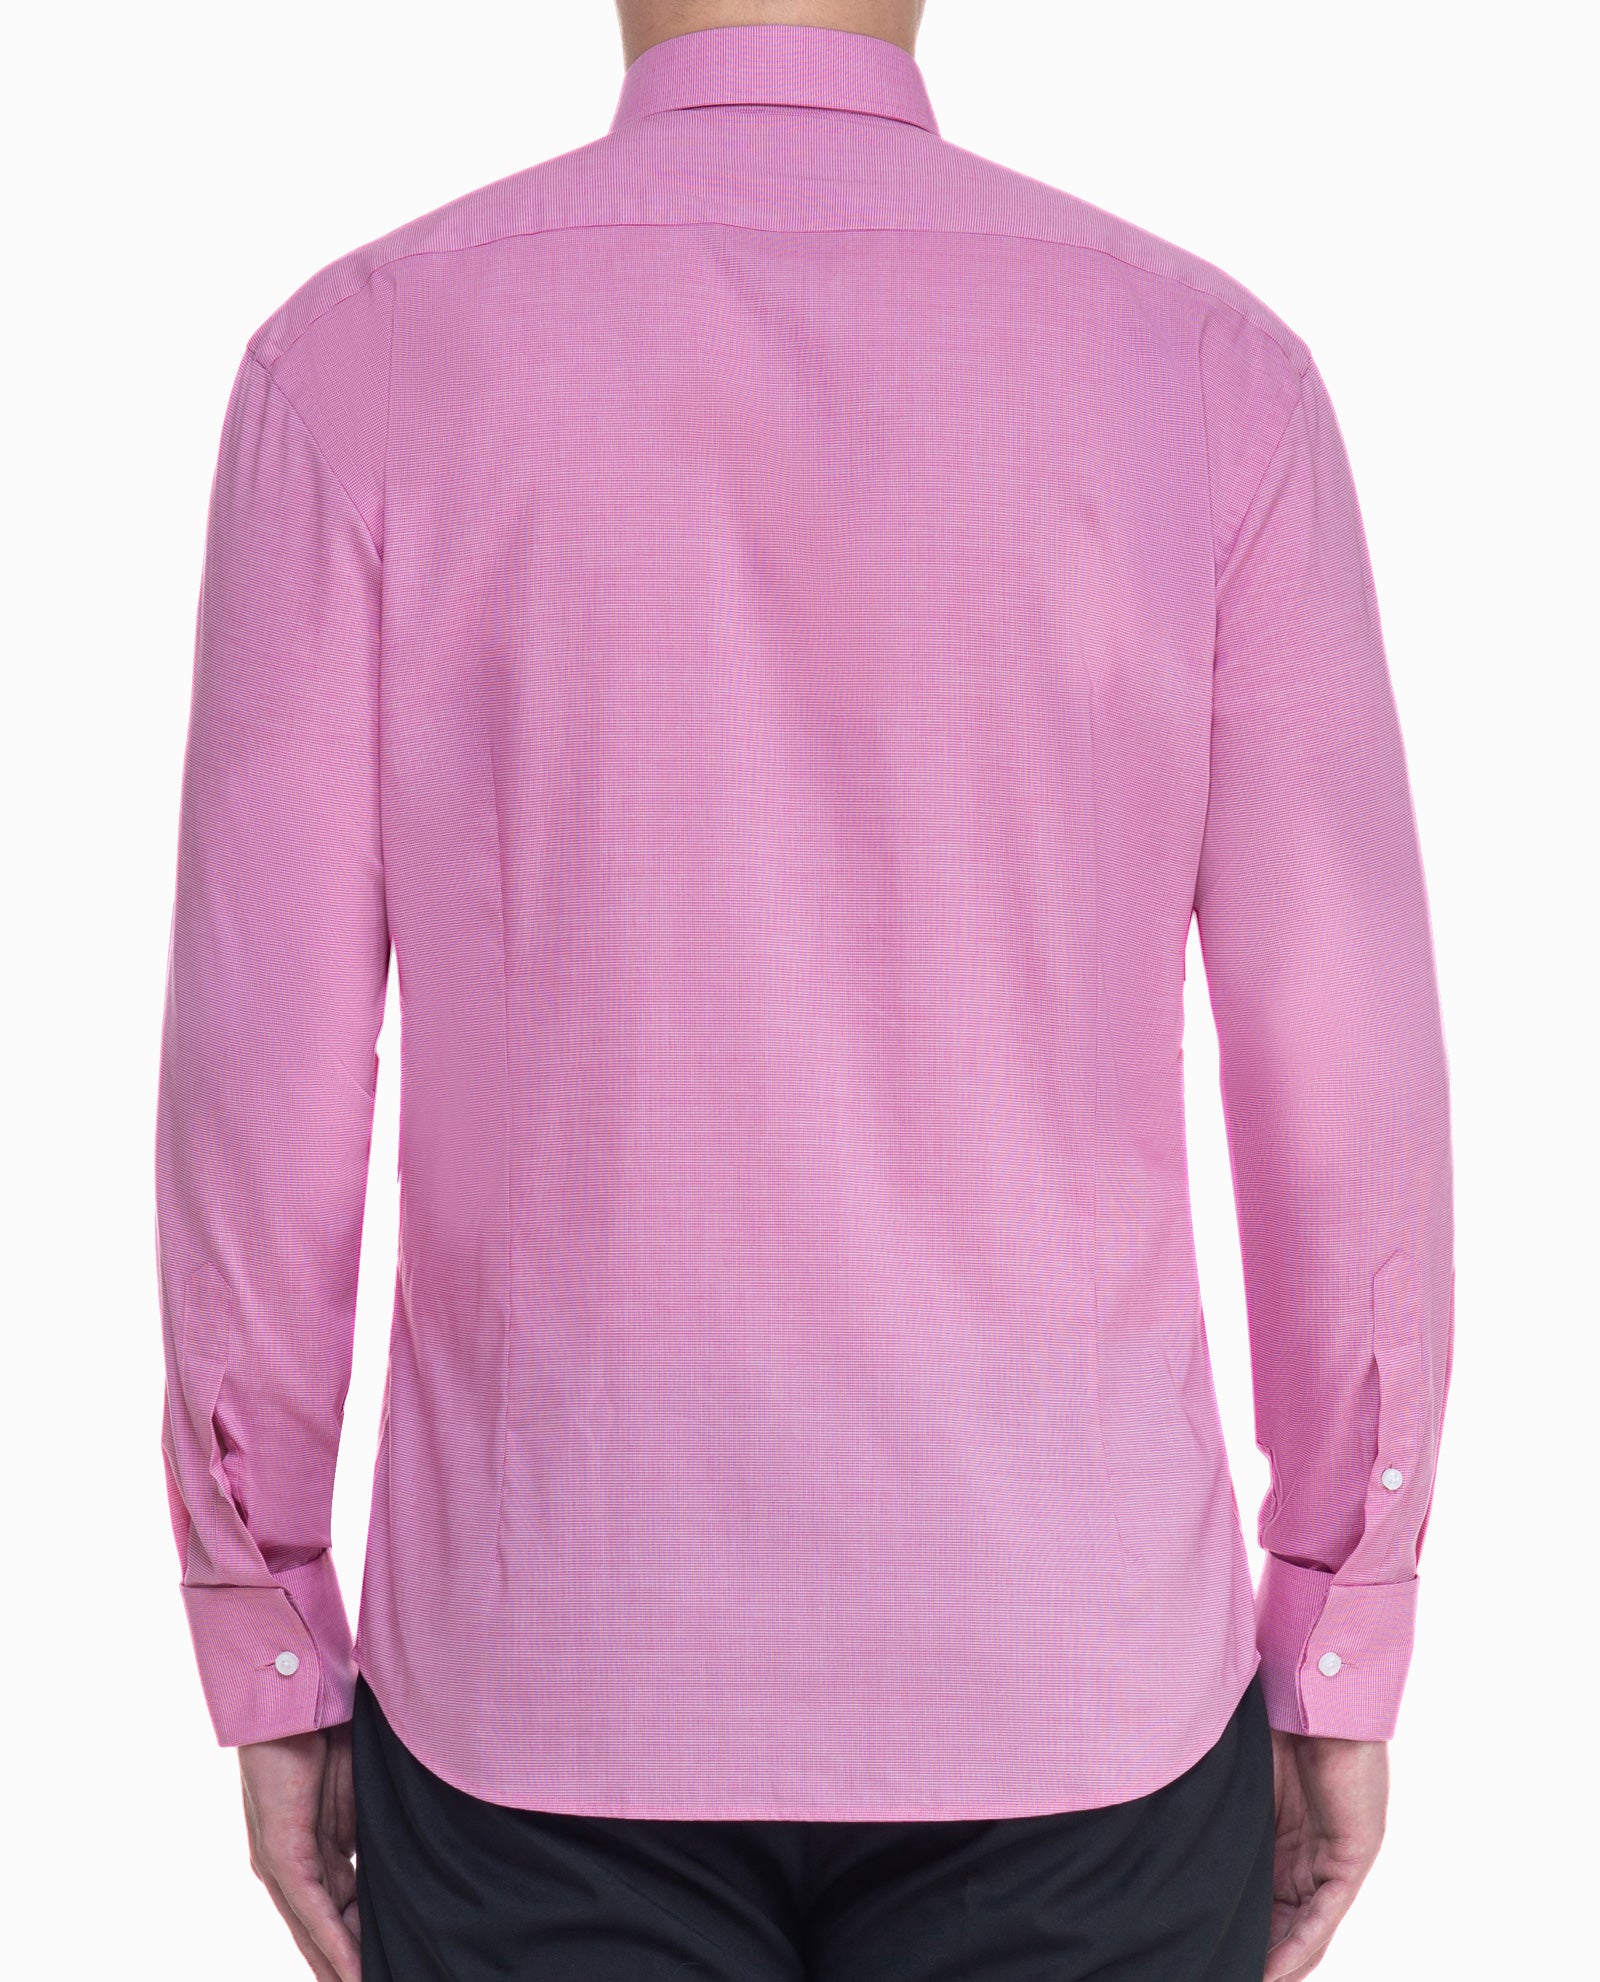 Sharp Pink Twill Mens Dress Shirt